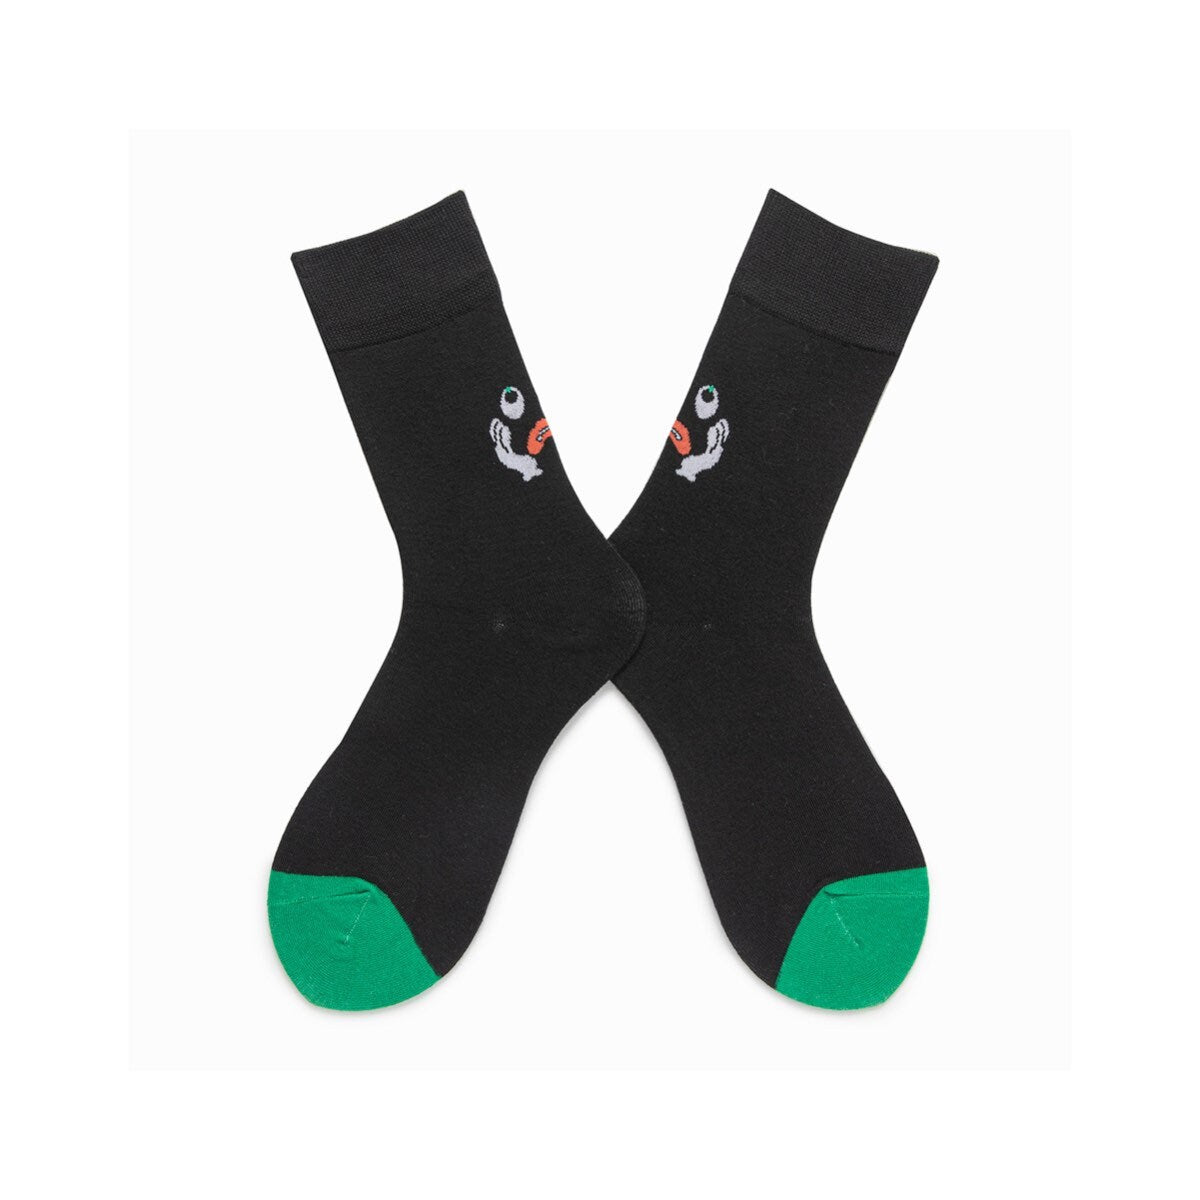 Miss June’s, Cotton socks, Cool socks, colorful socks, striped socks,patterned socks, design socks,unisex socks